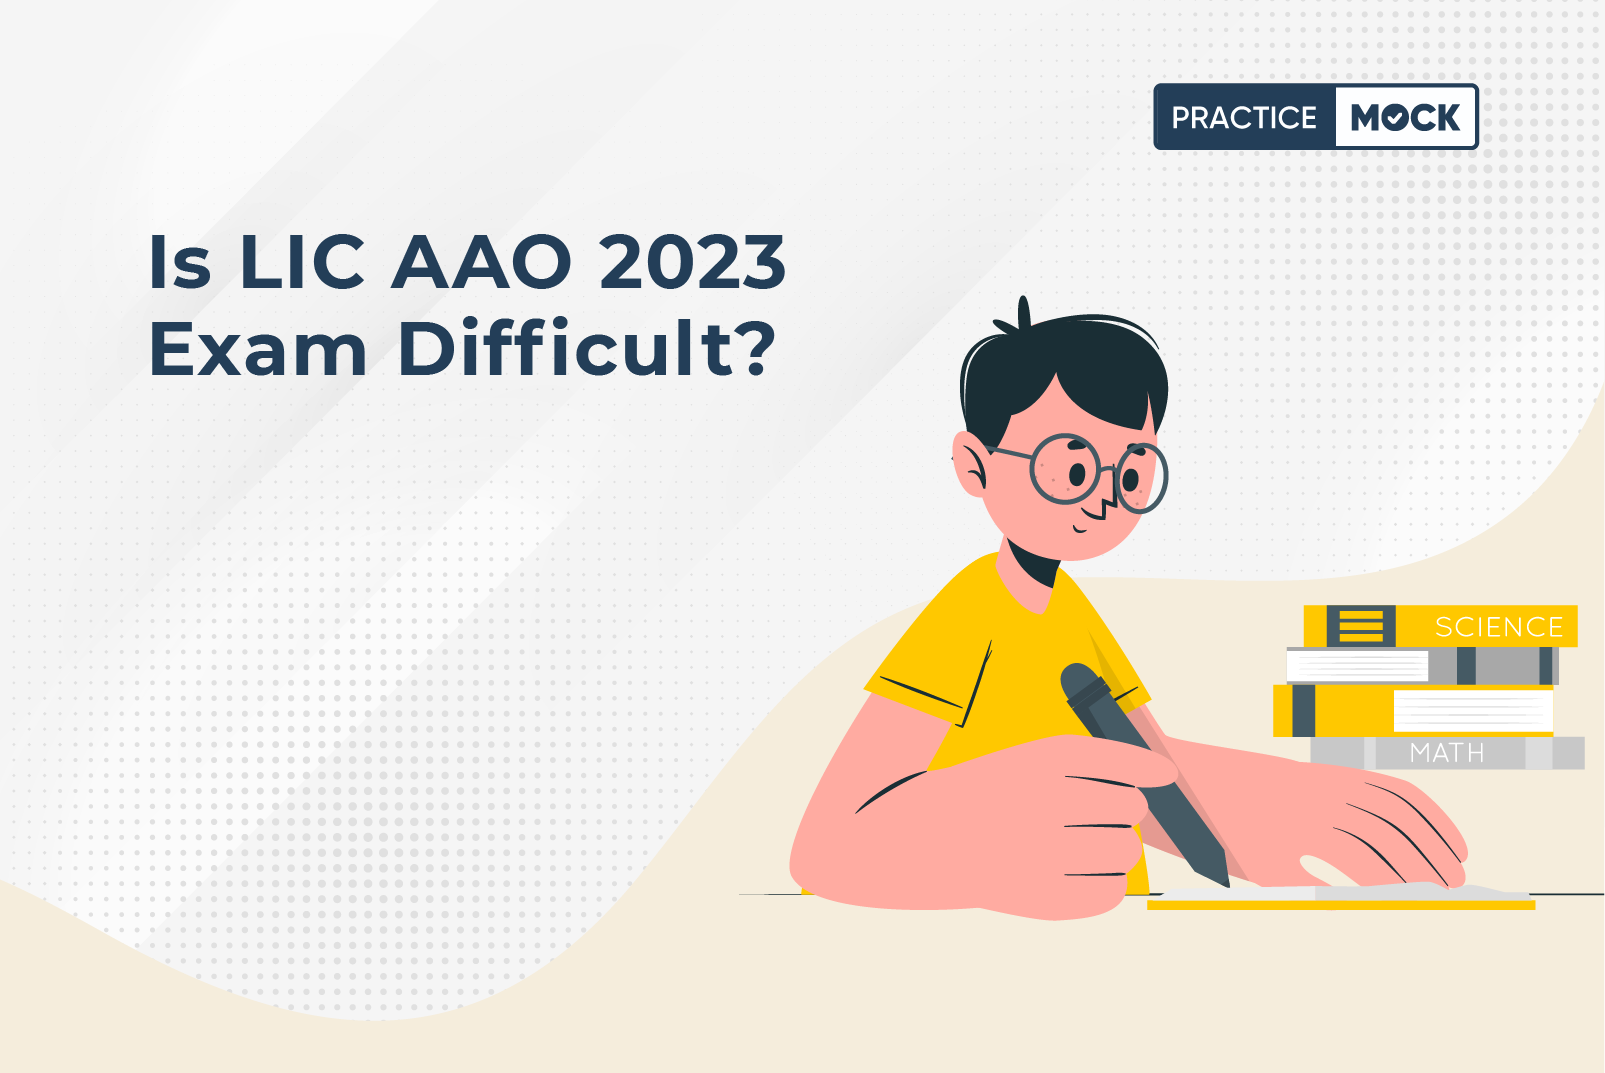 Is it difficult to crack LIC AAO Exam 2023?